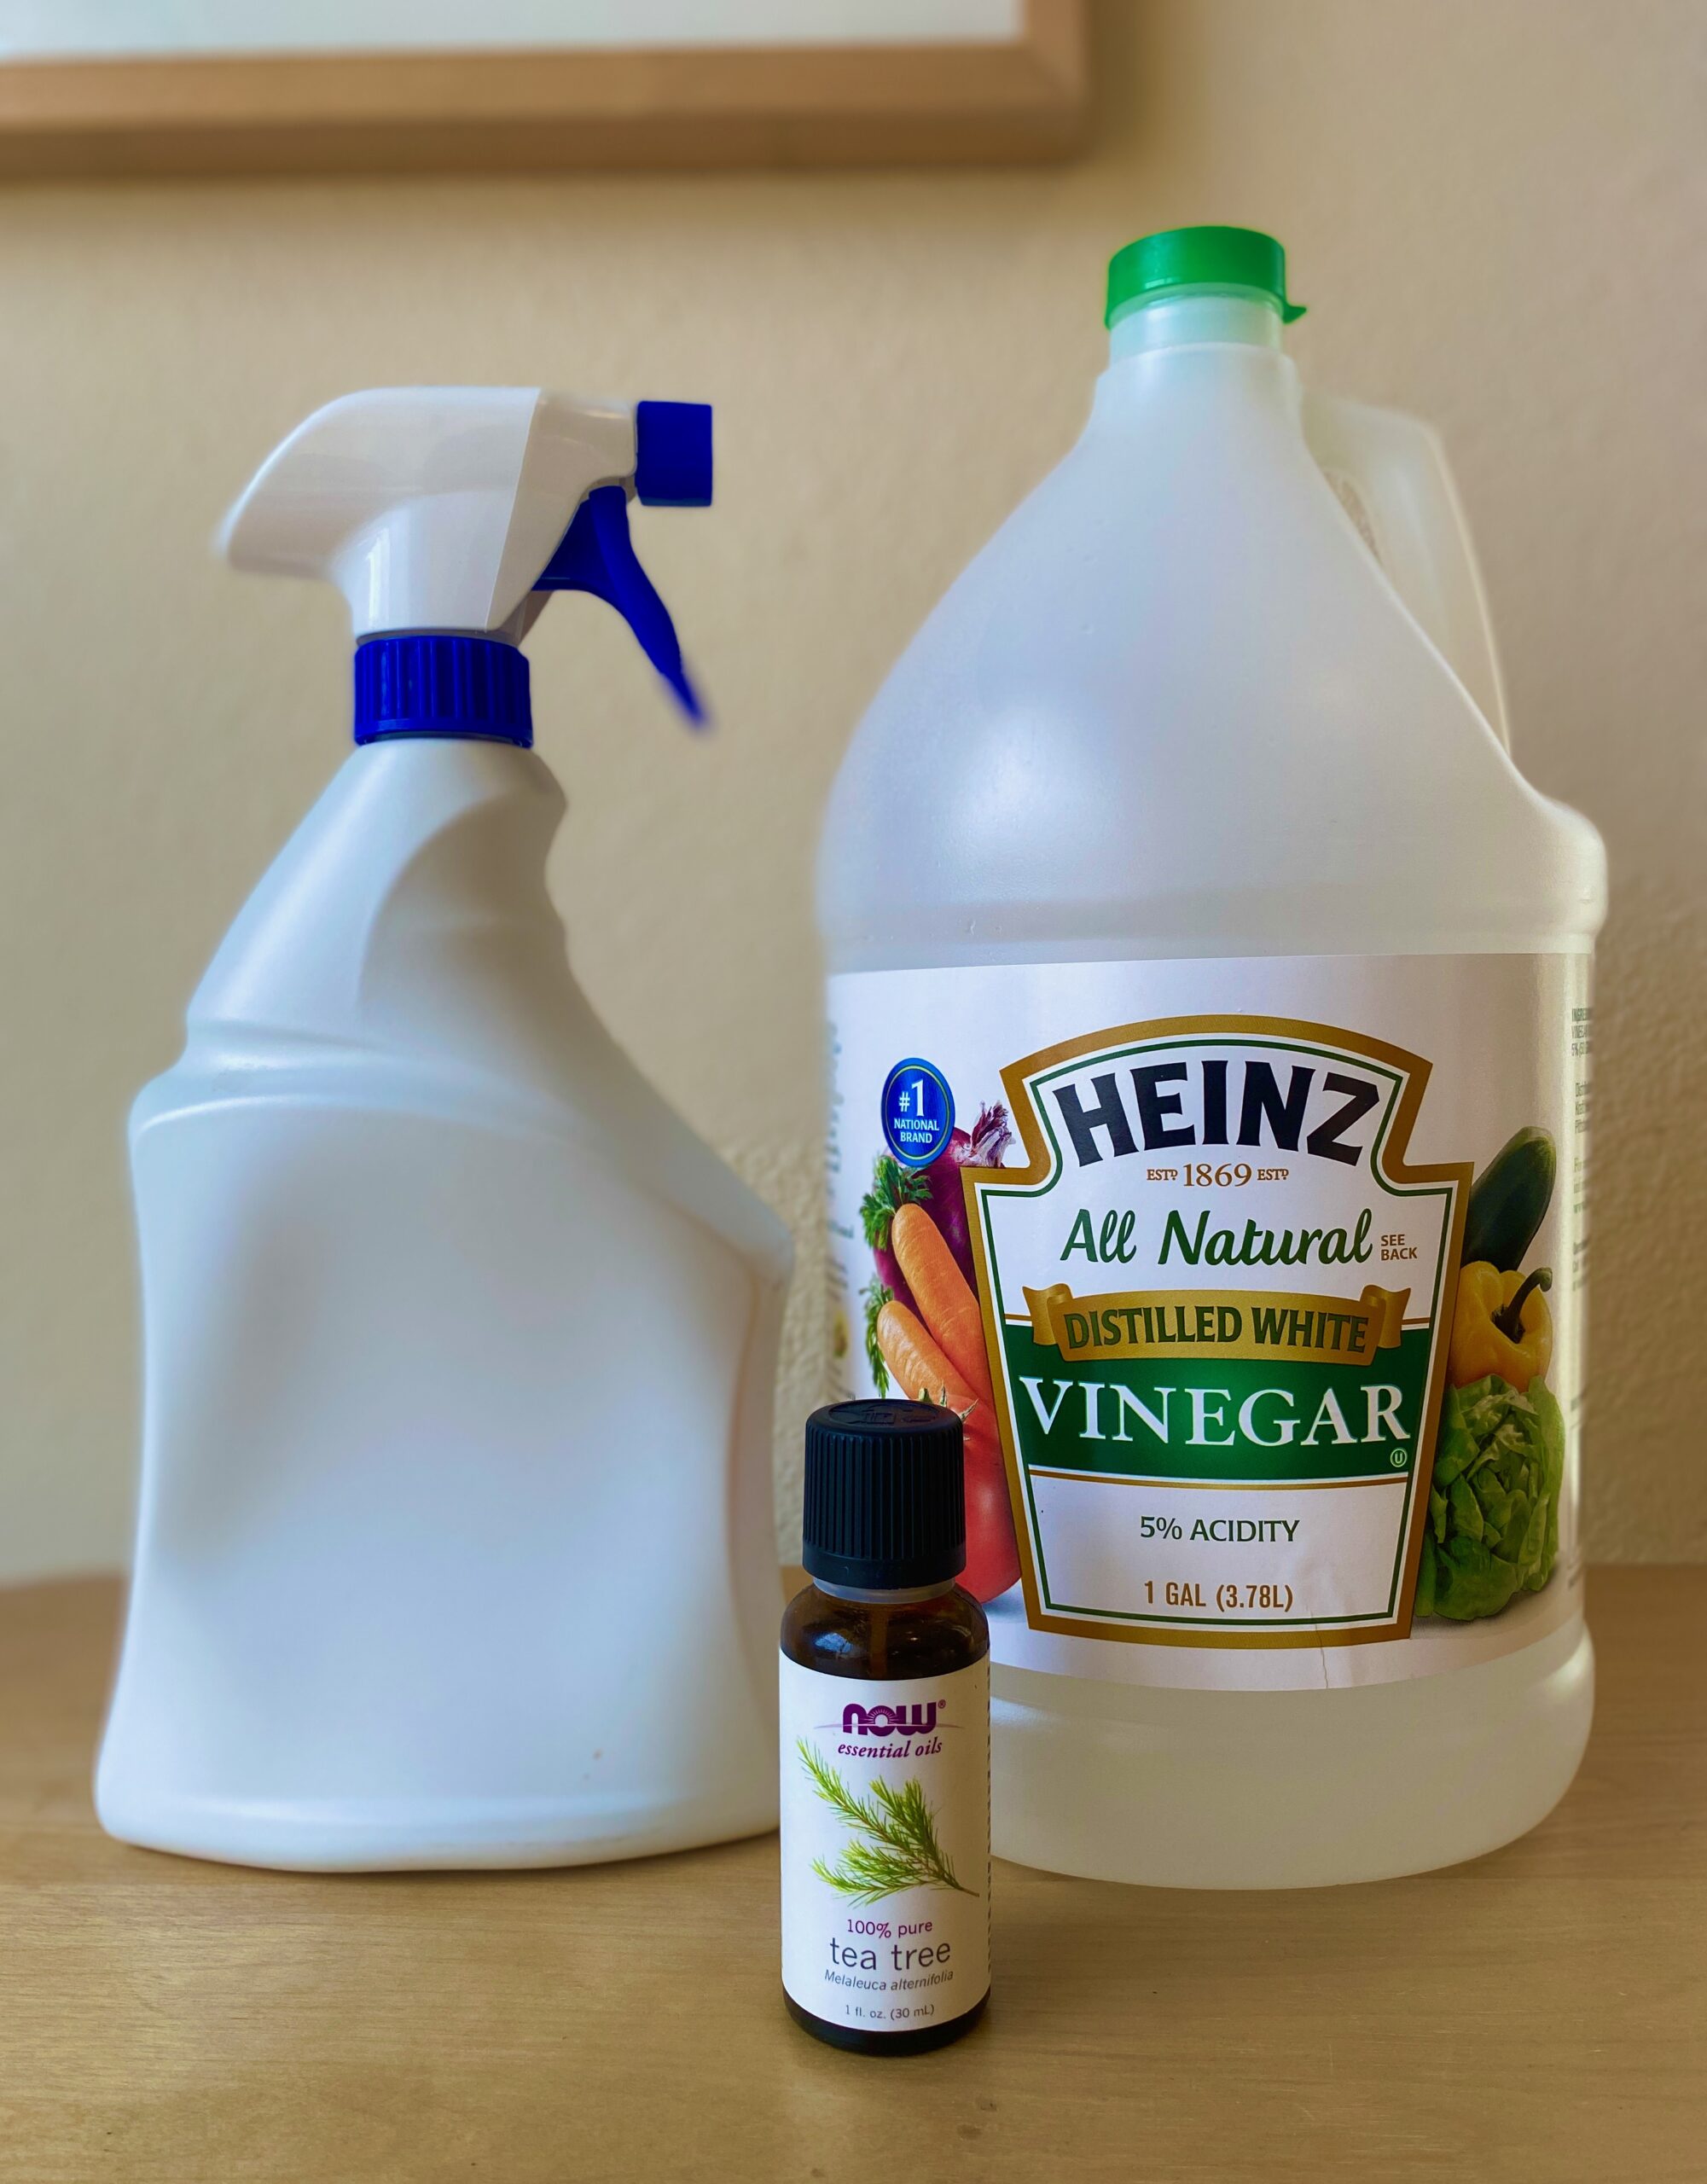 diy homemade ant repellent spray ingredients with vinegar, tea tree oil and spray bottle